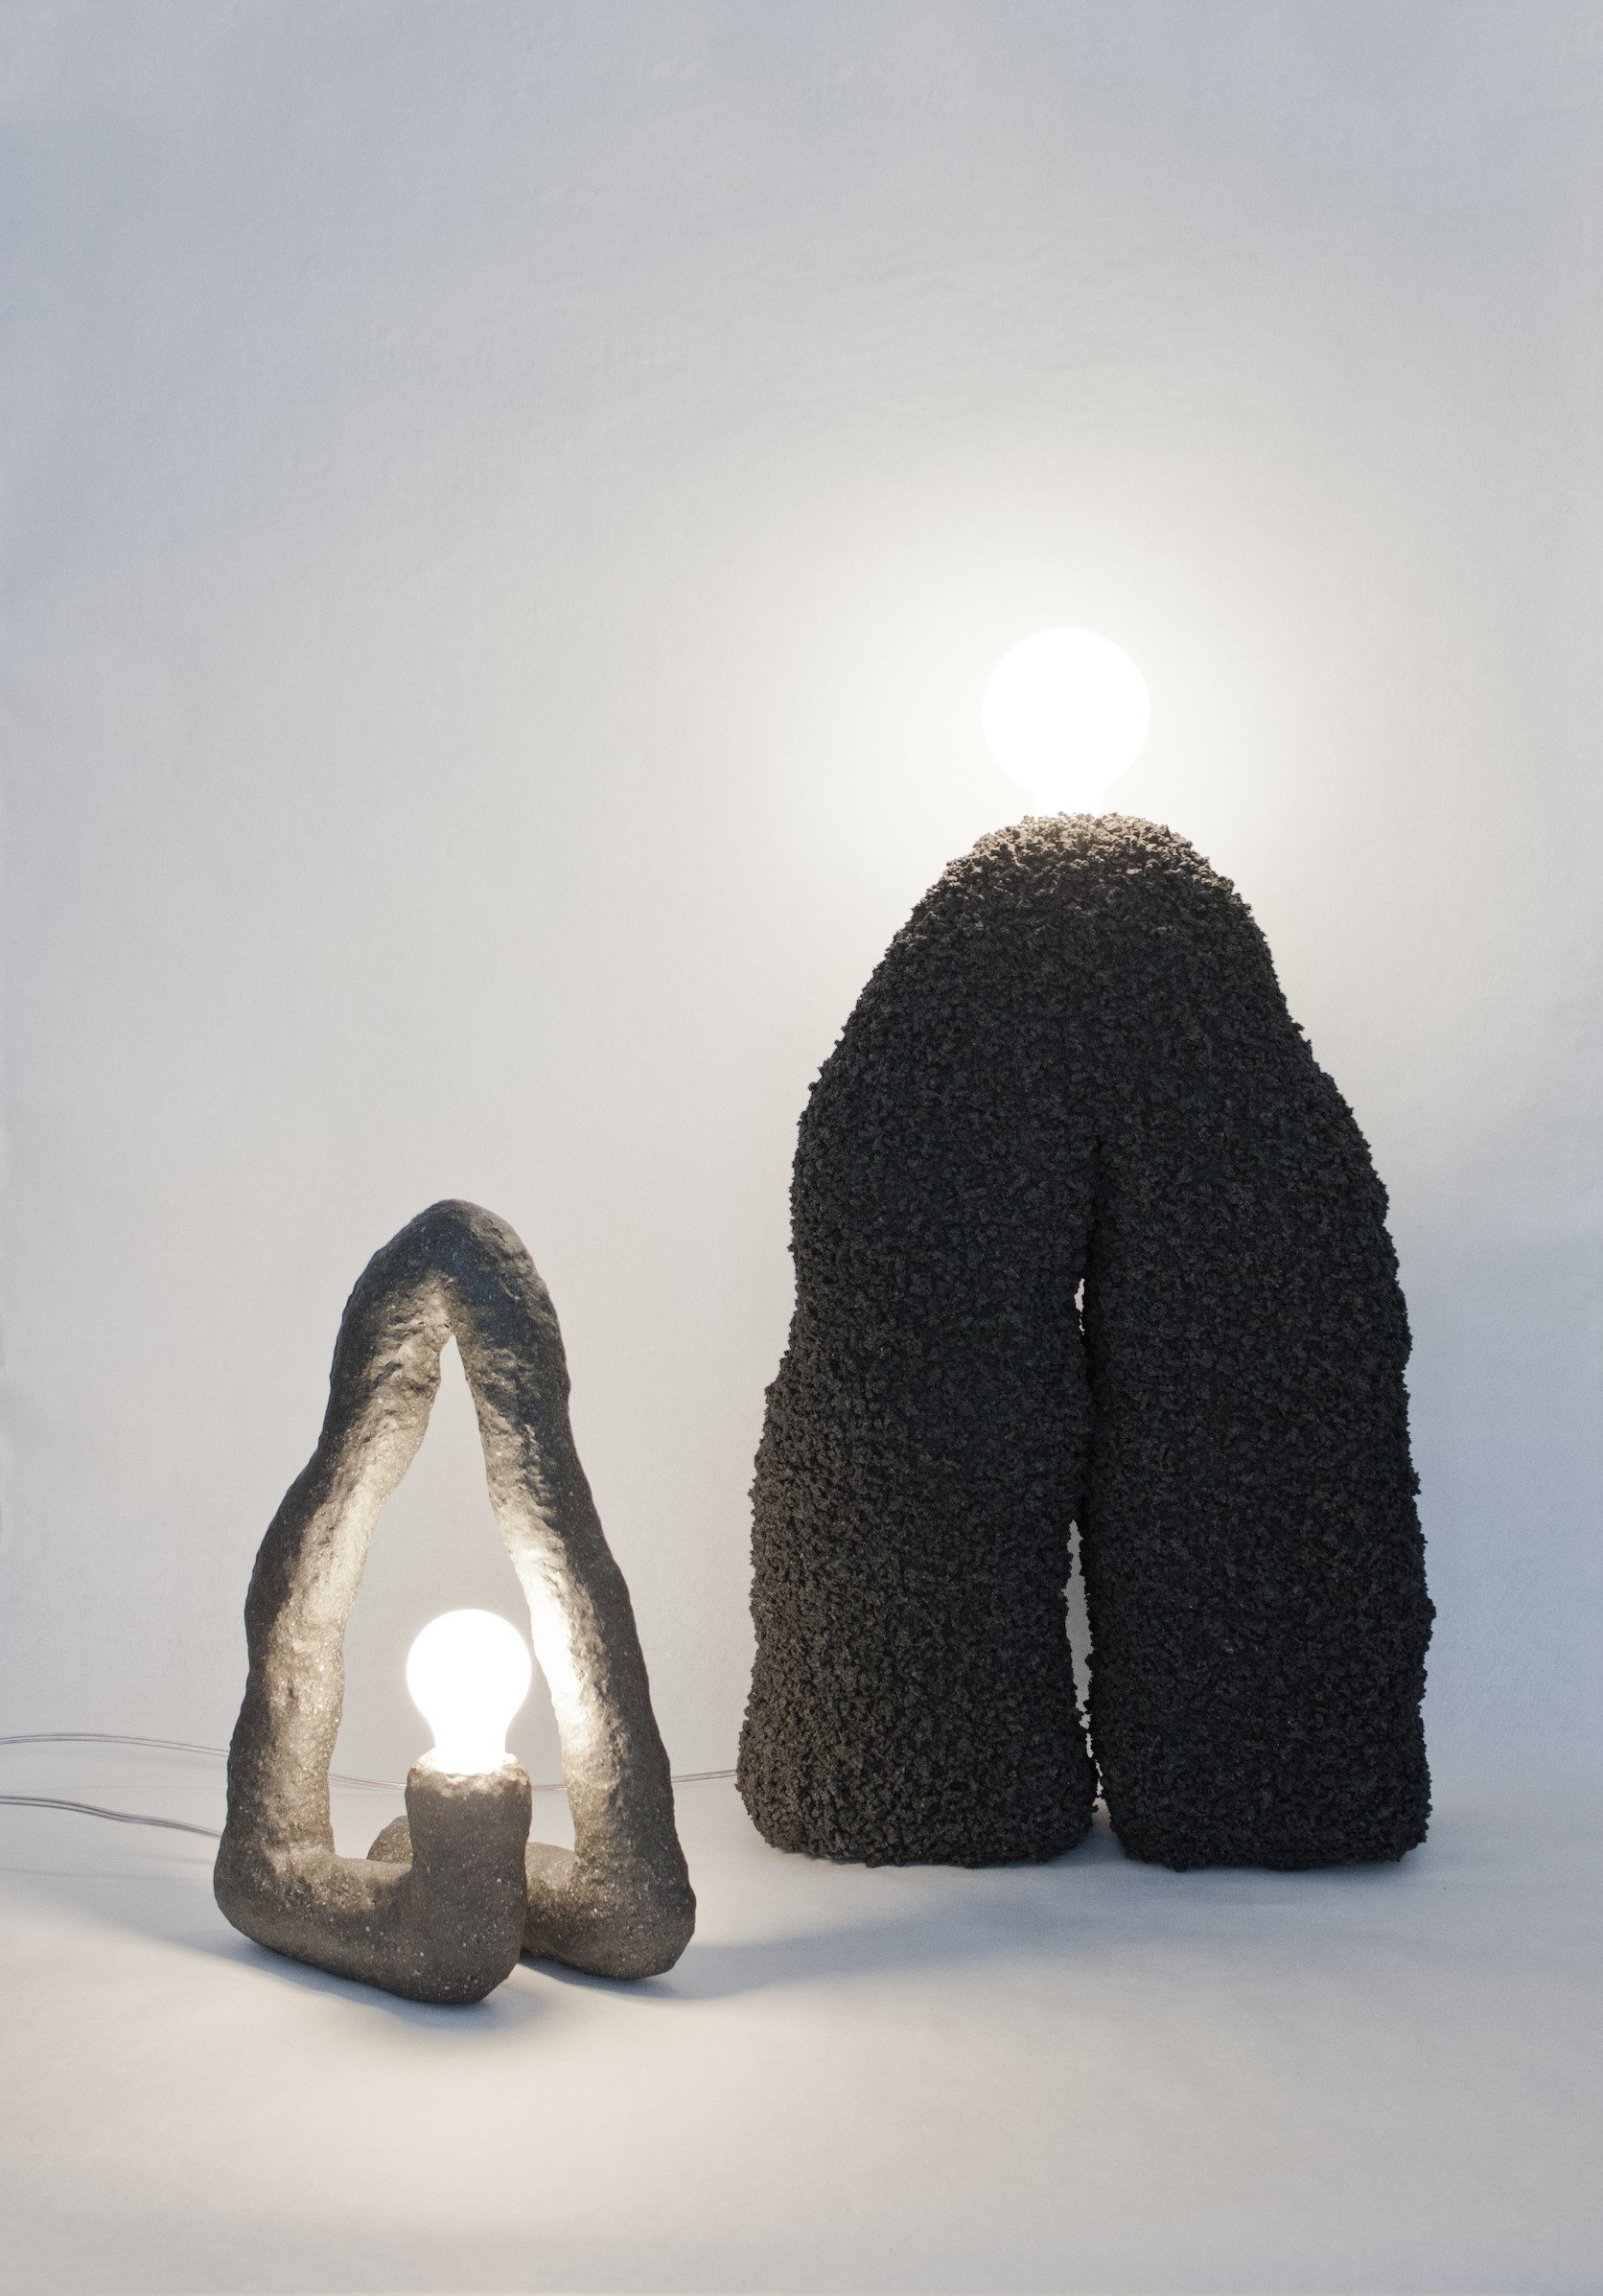 Minimalist Lighting Collection "Luminous Shapes" by Stine Mikkelsen